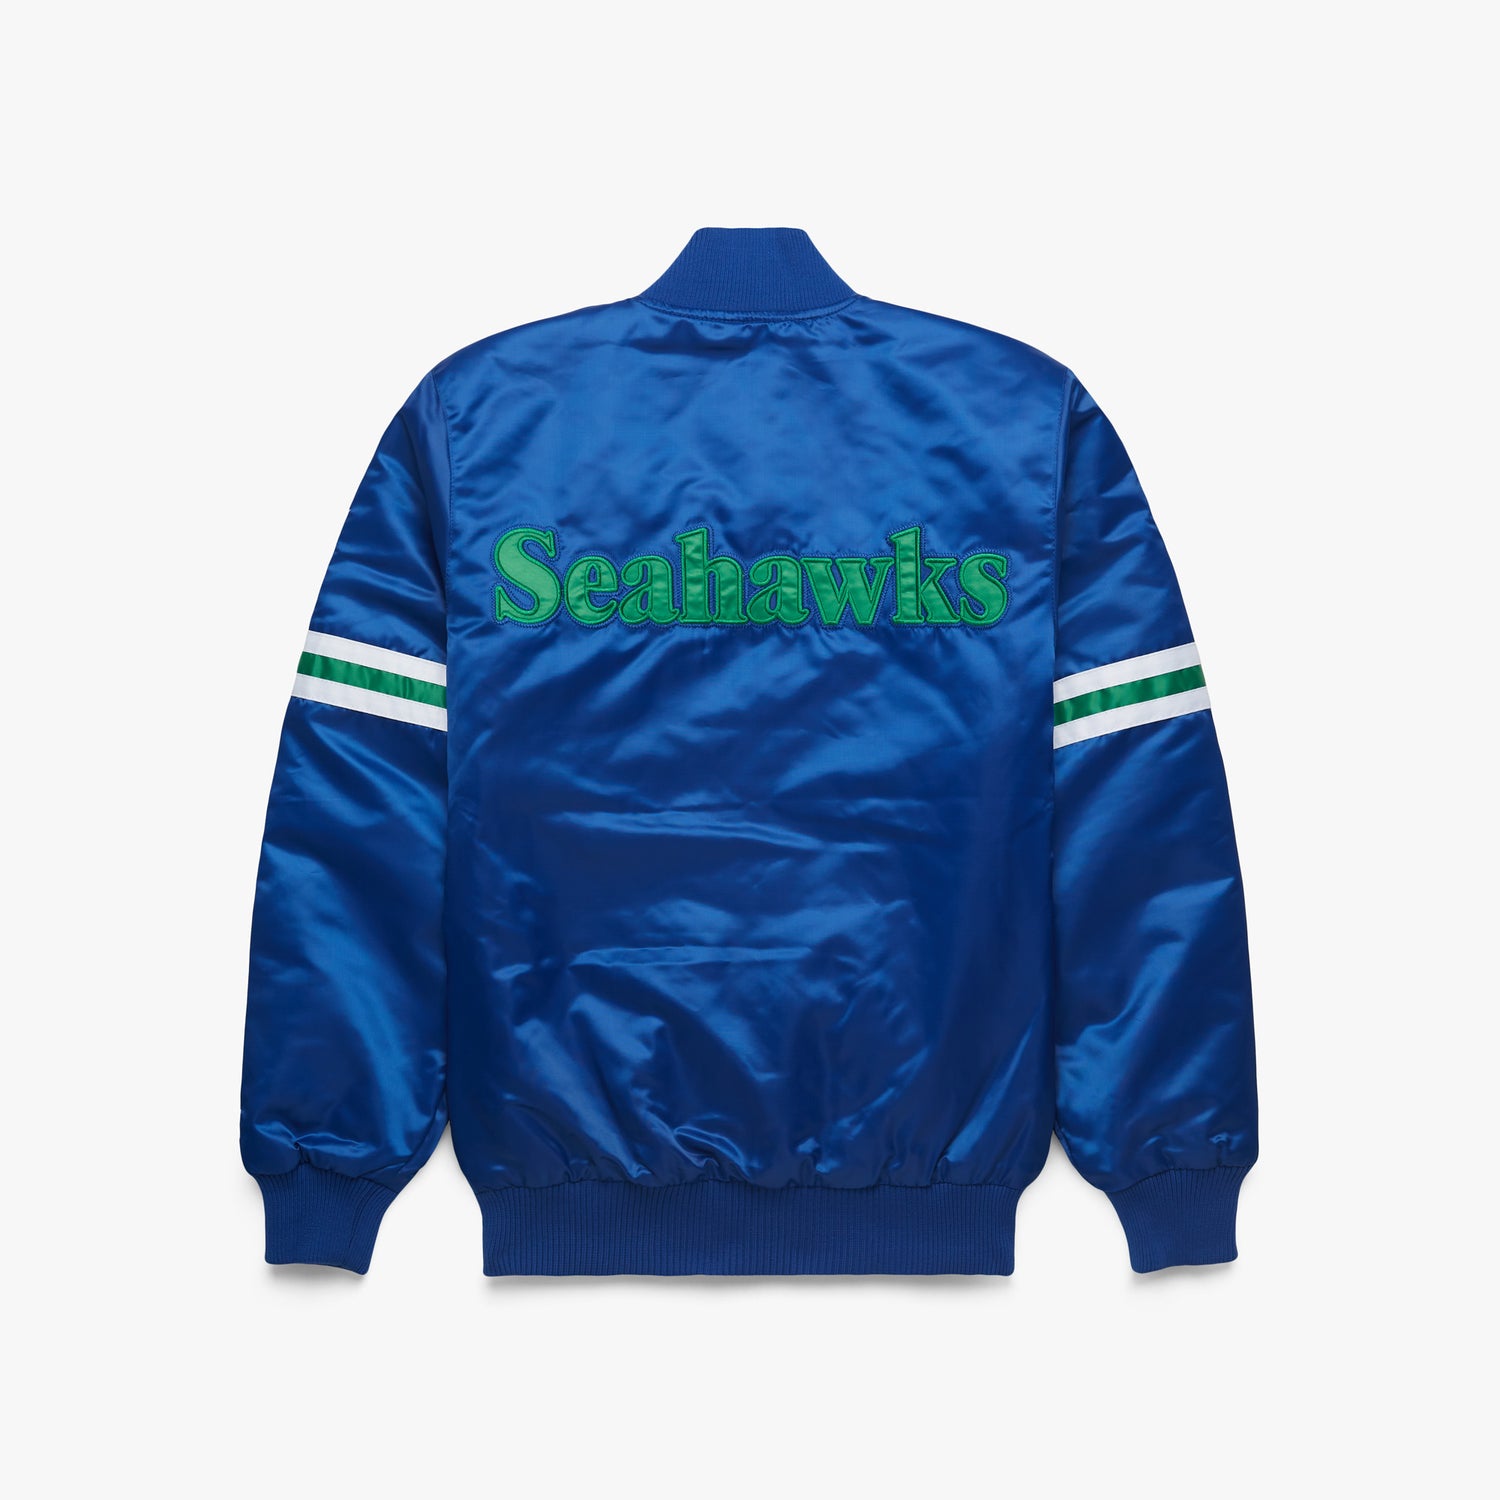 Vintage Seattle Mariners Starter Satin Baseball Jacket, Size Large